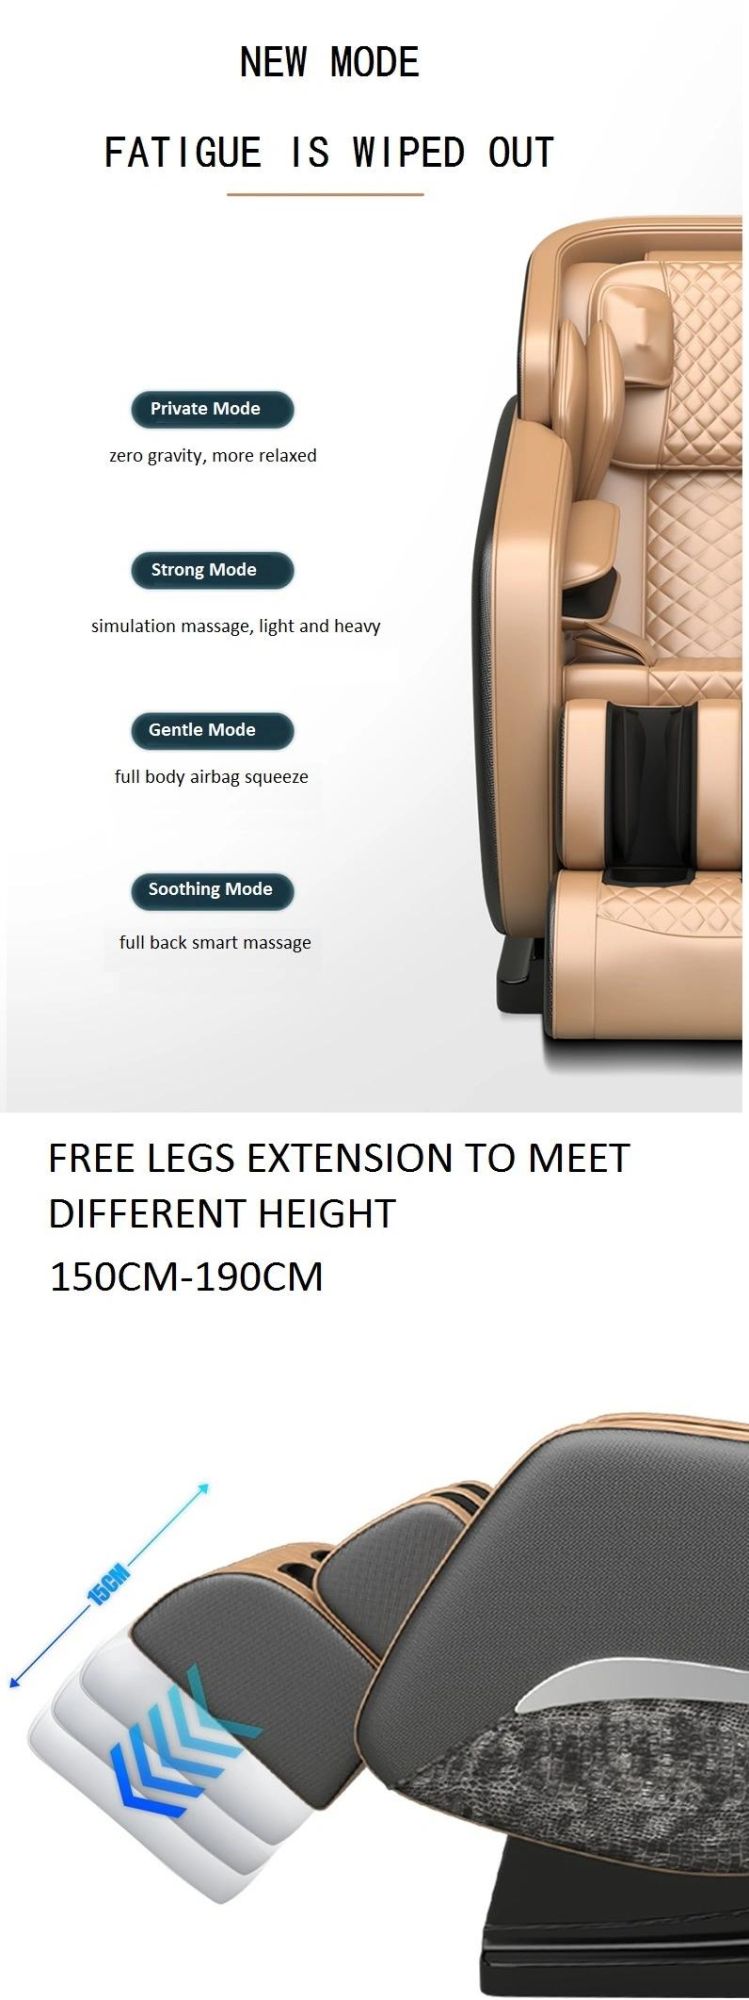 New SL-Track Zero Gravity Massage Chair Coin Professional Massage Chair OEM Manufacturer